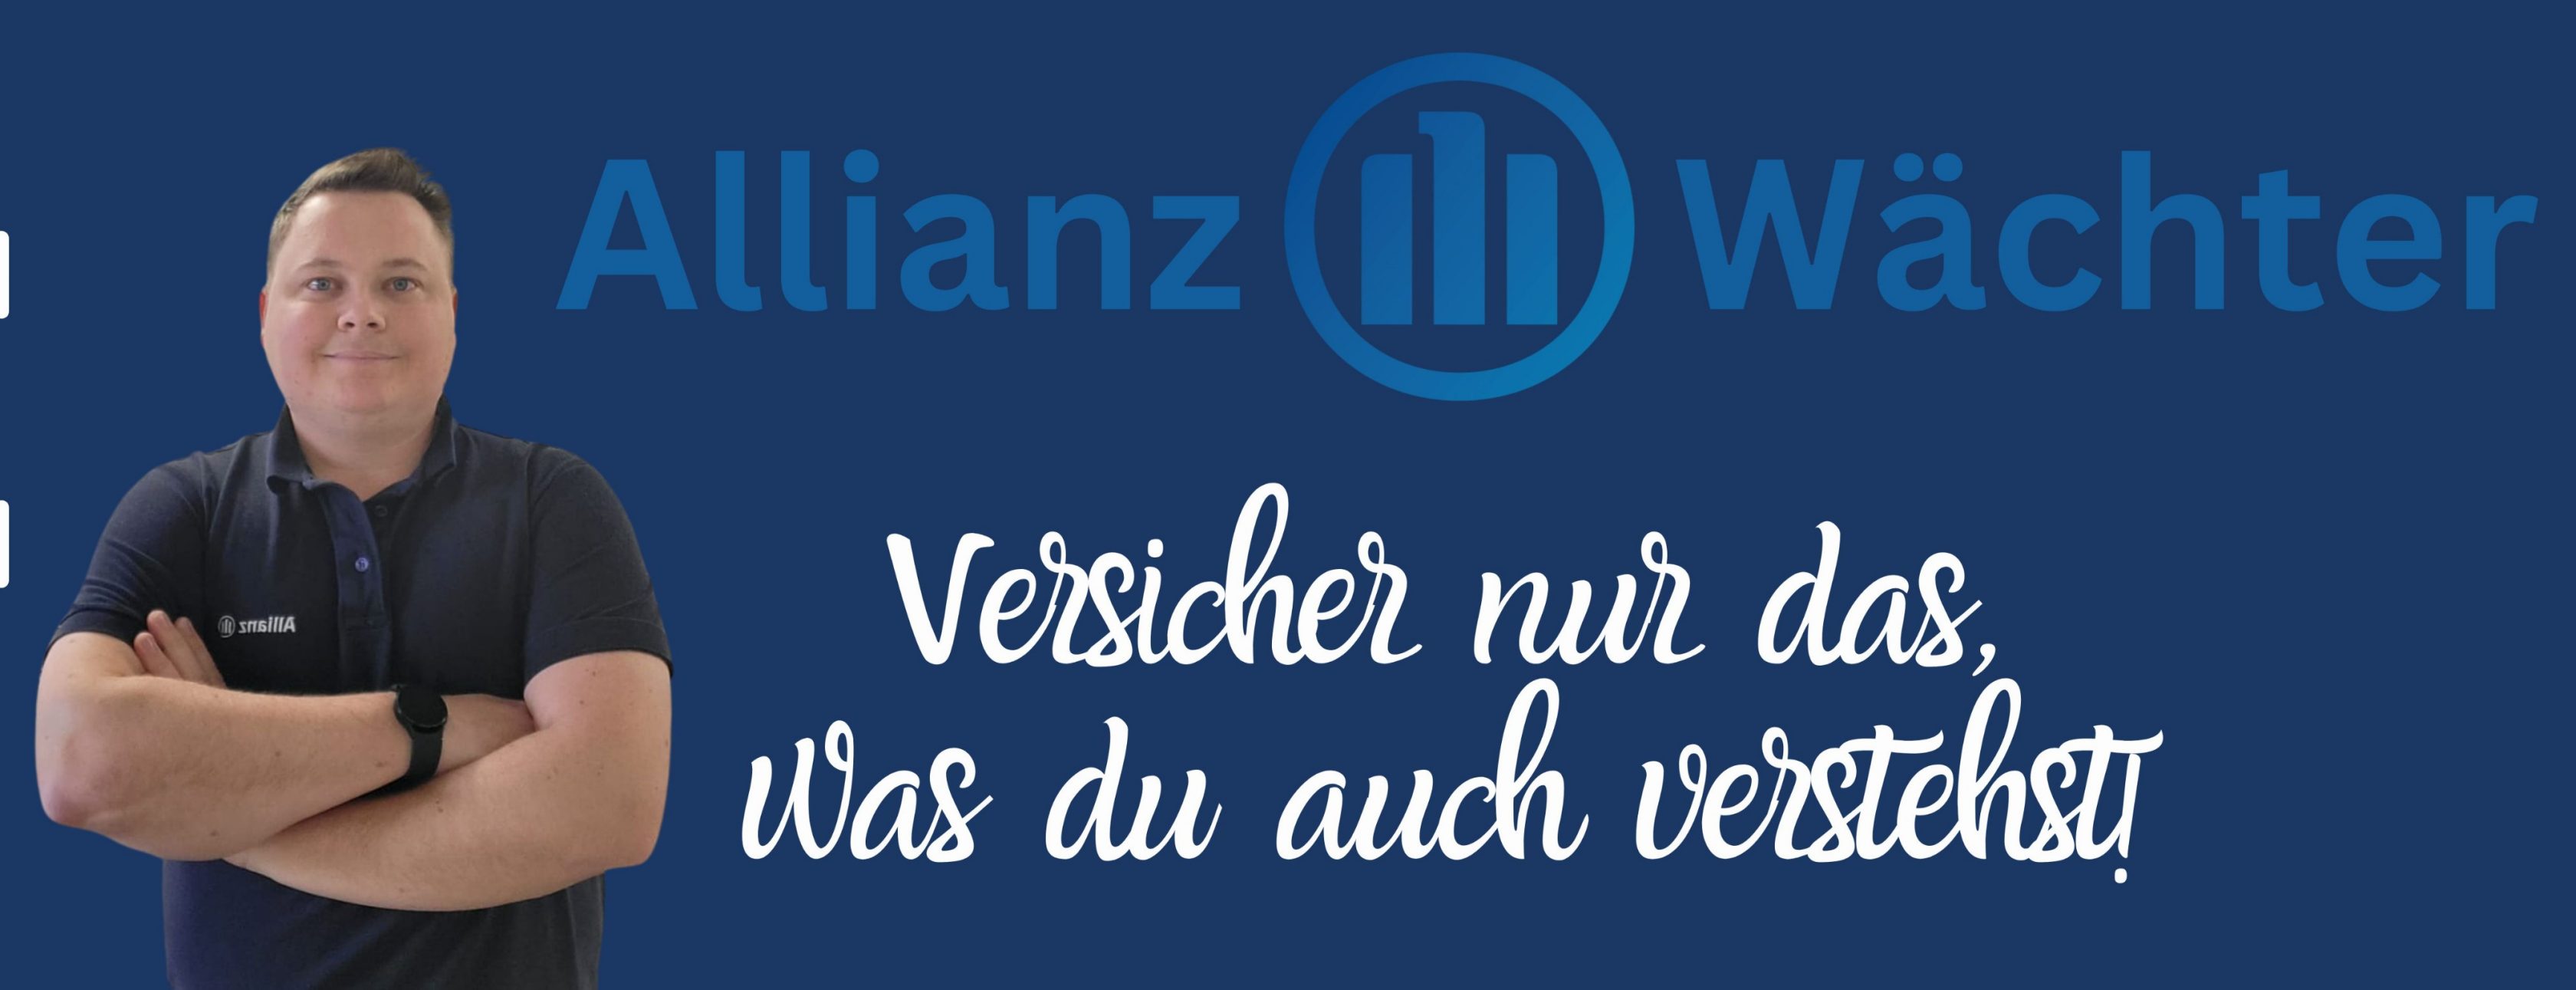 Allianz Versicherung Andreas Wächter Vohenstrauß - Allianz_Wächter_Vohenstrauß_NEW_Versicherung_Logo.